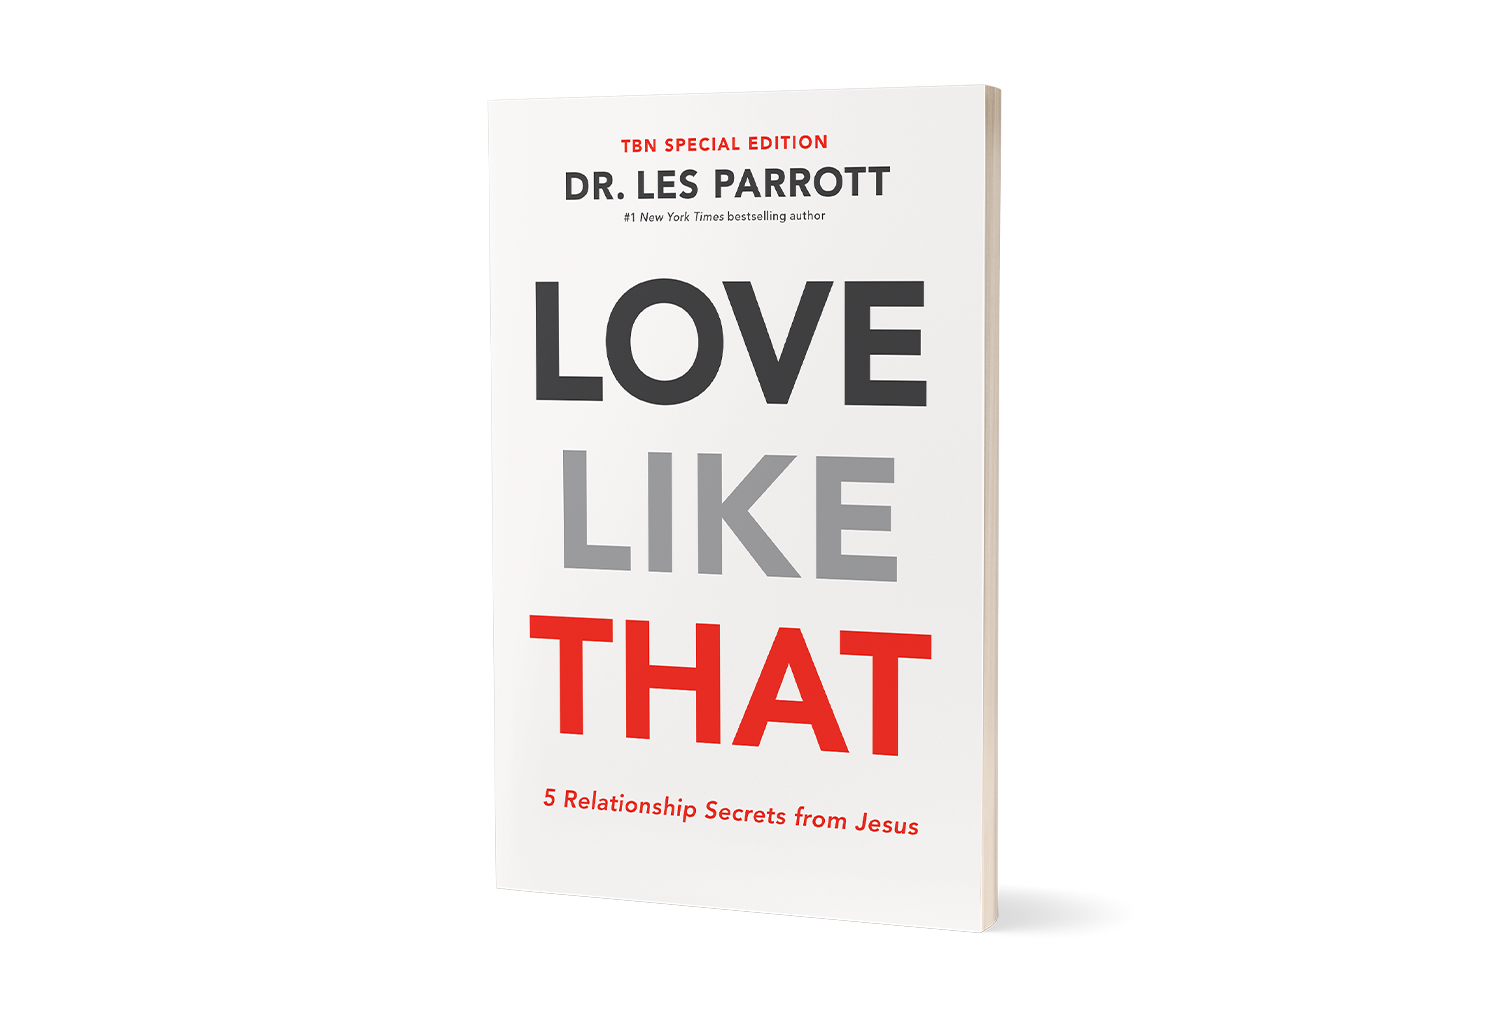 Love Like That: 5 Relationship Secrets From Jesus, Dr. Les Parrott on TBN